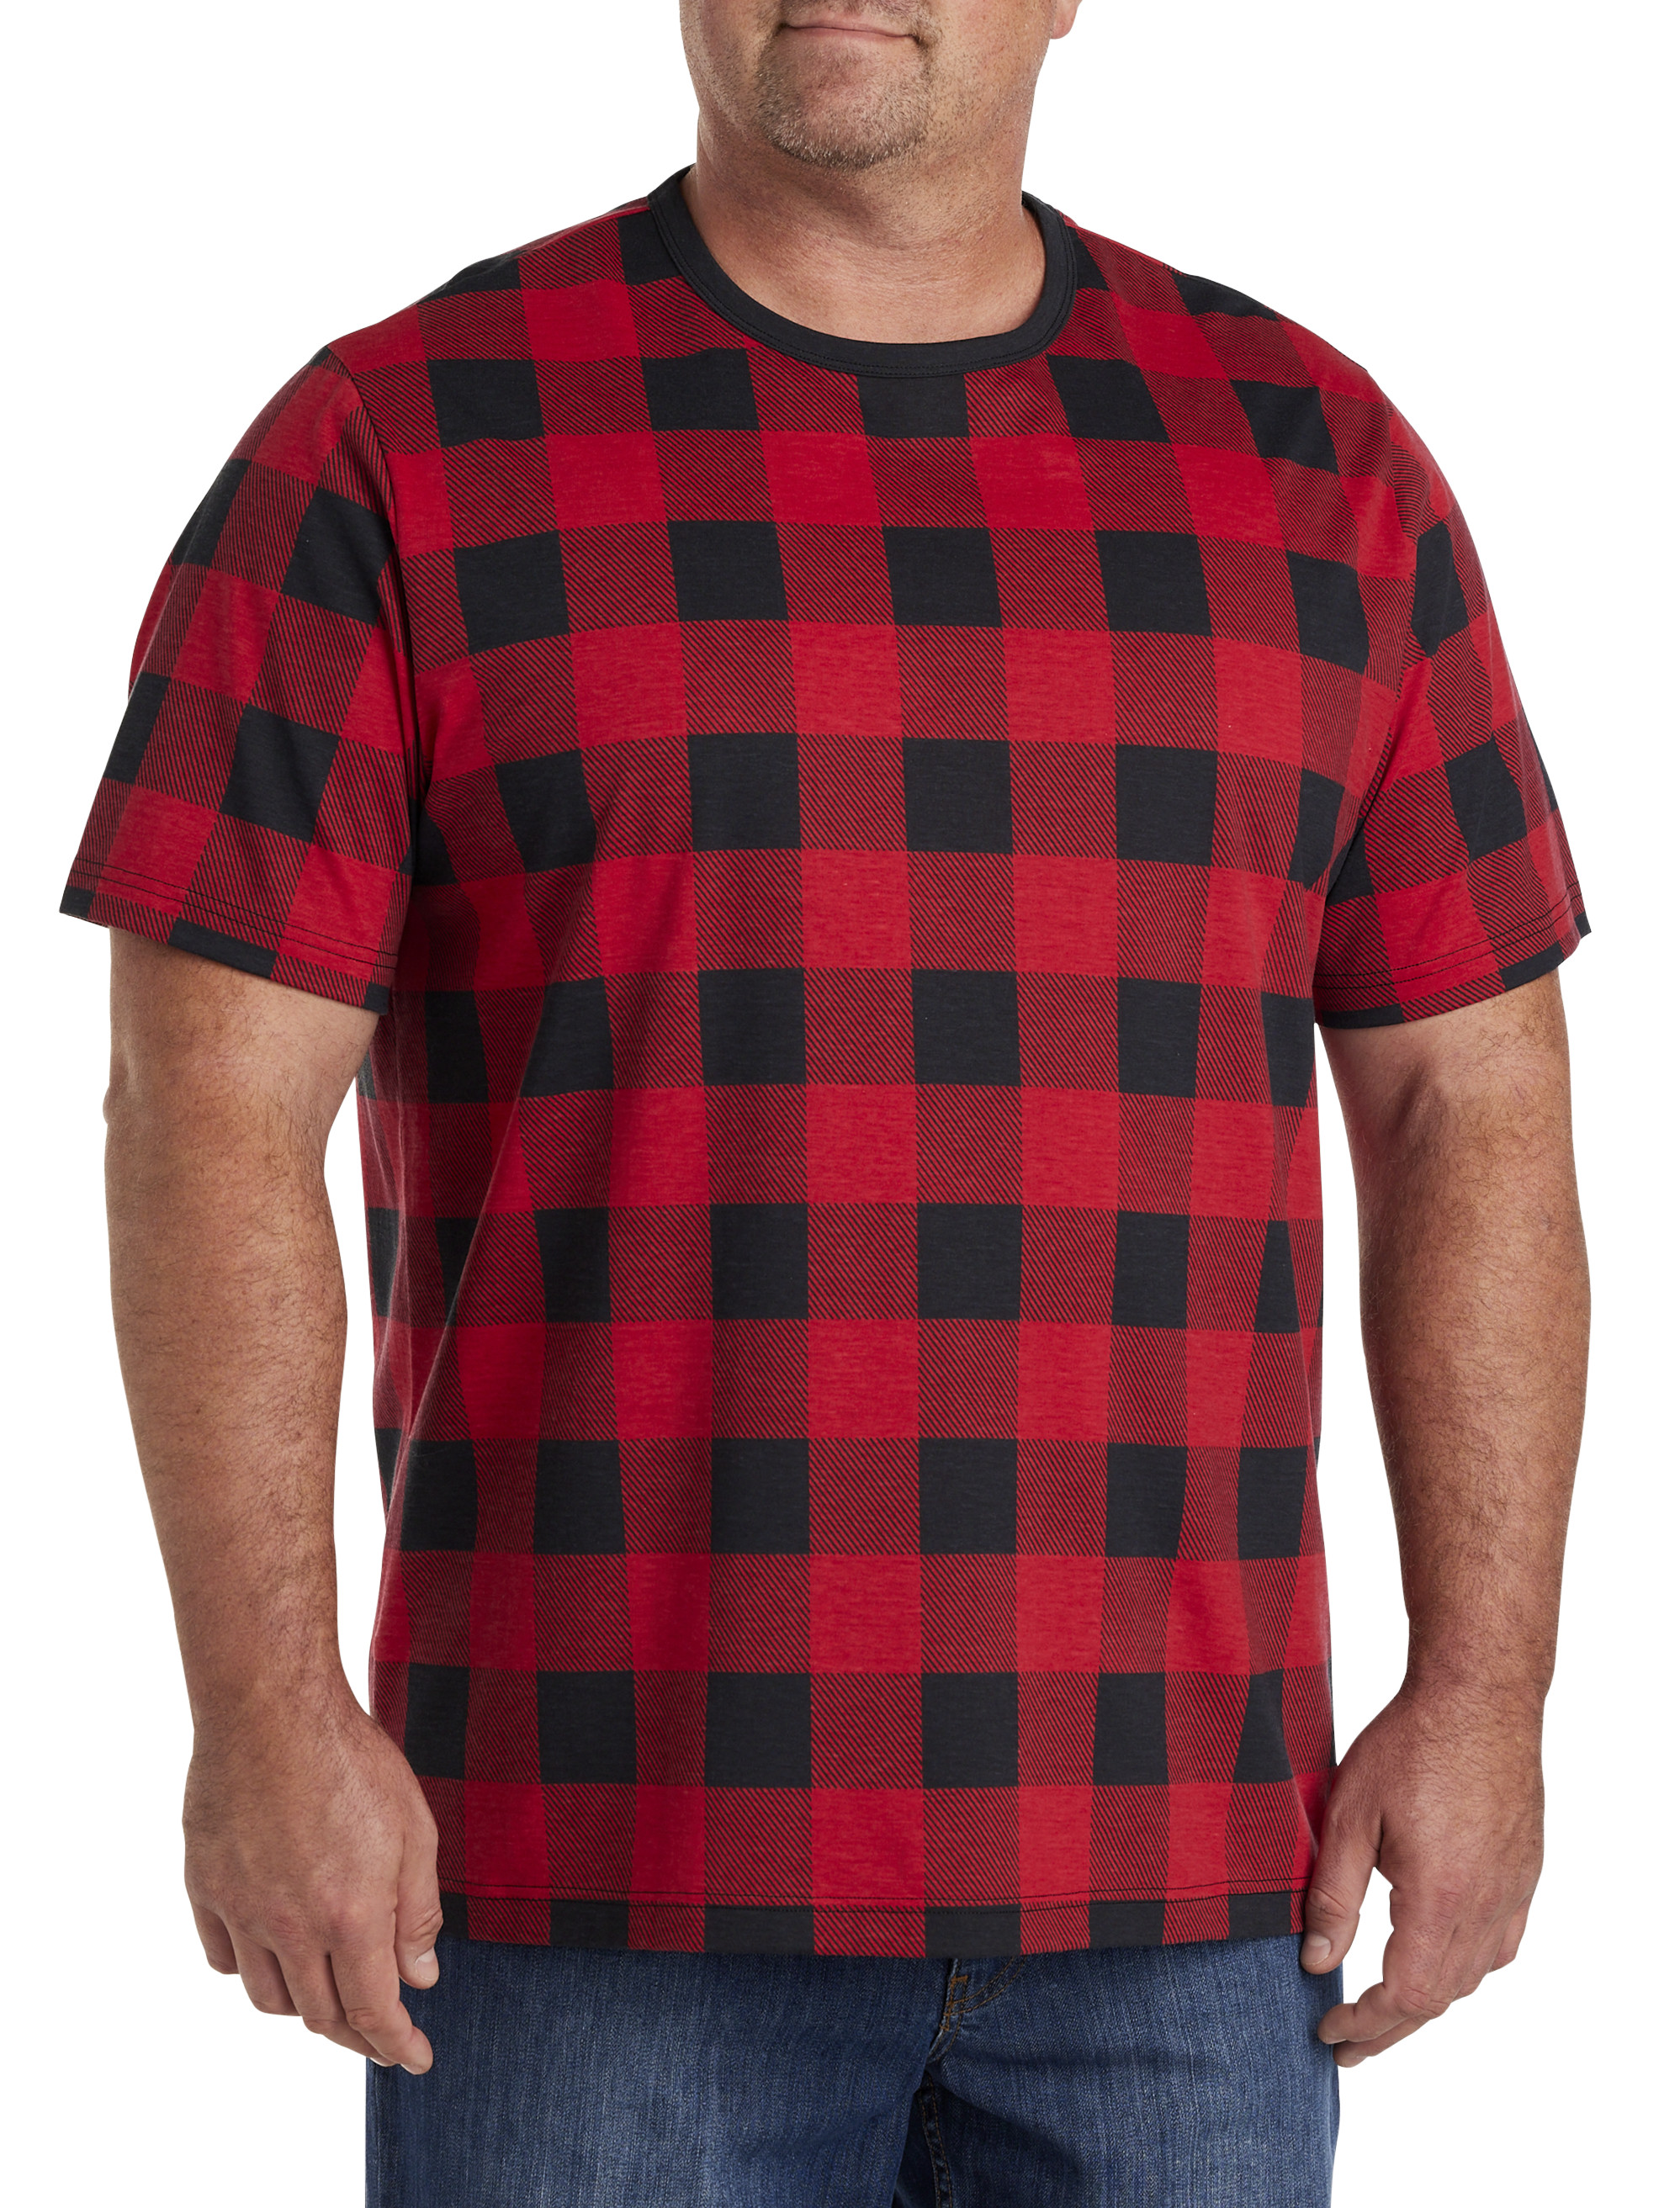 Men's Shirts - Shop T-Shirts, Plaid, Western & More